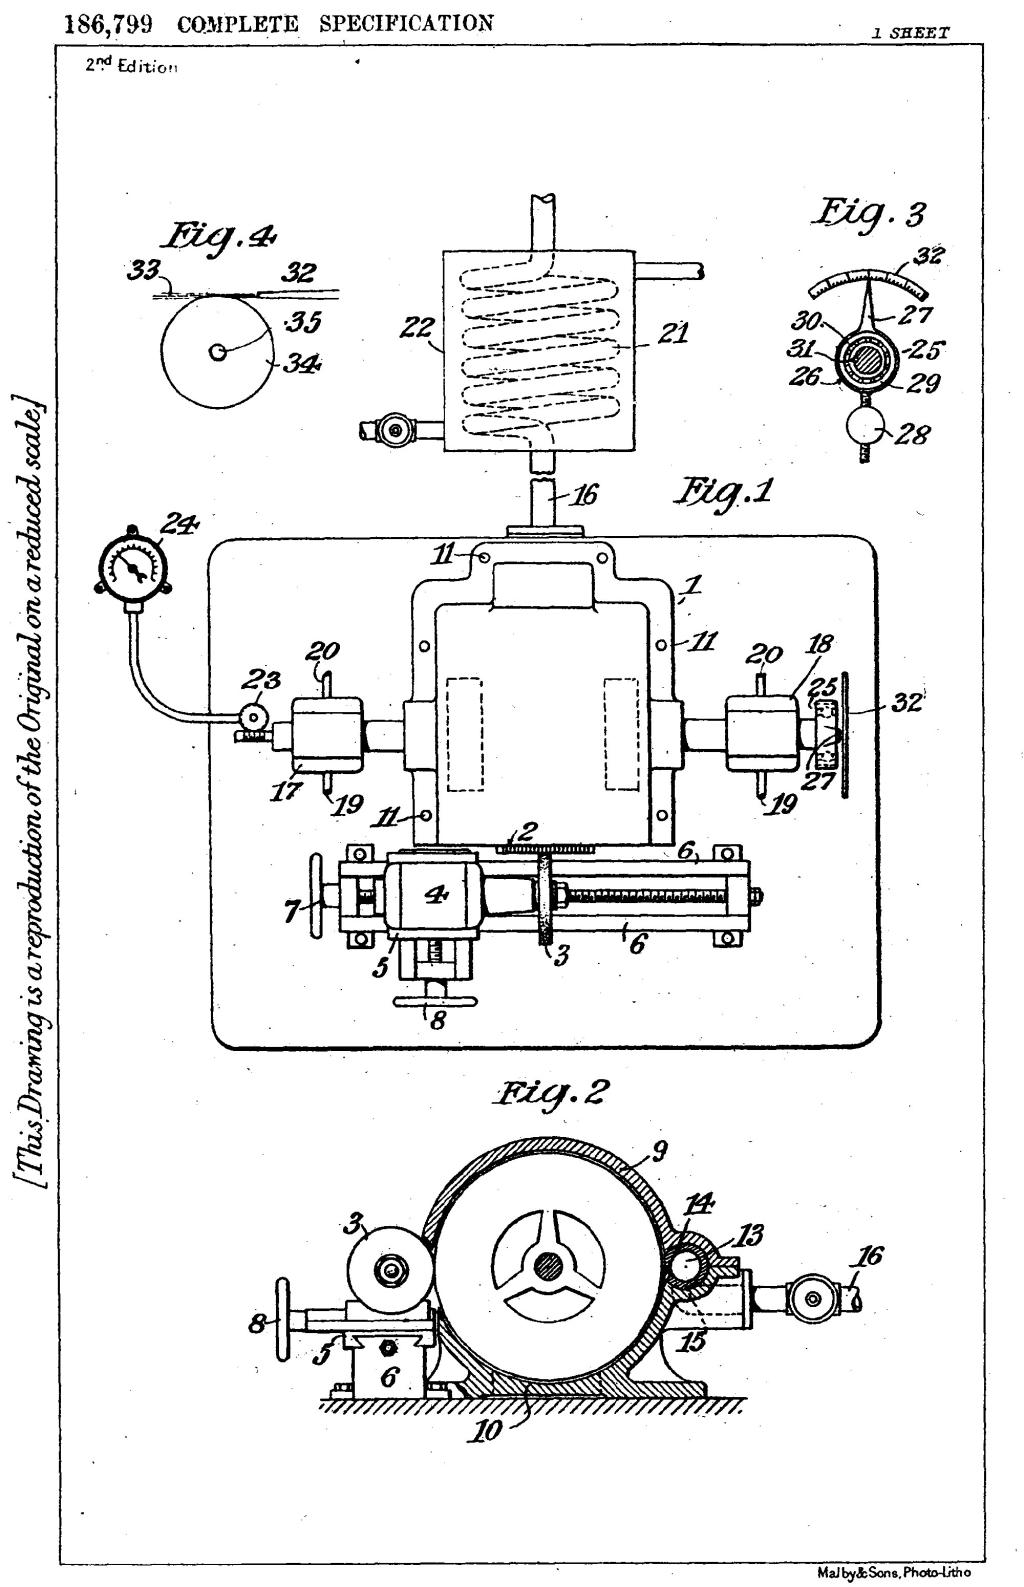 Nikola Tesla British Patent 186,799 - Process of and Apparatus for Balancing Rotating Machine Parts - Image 1